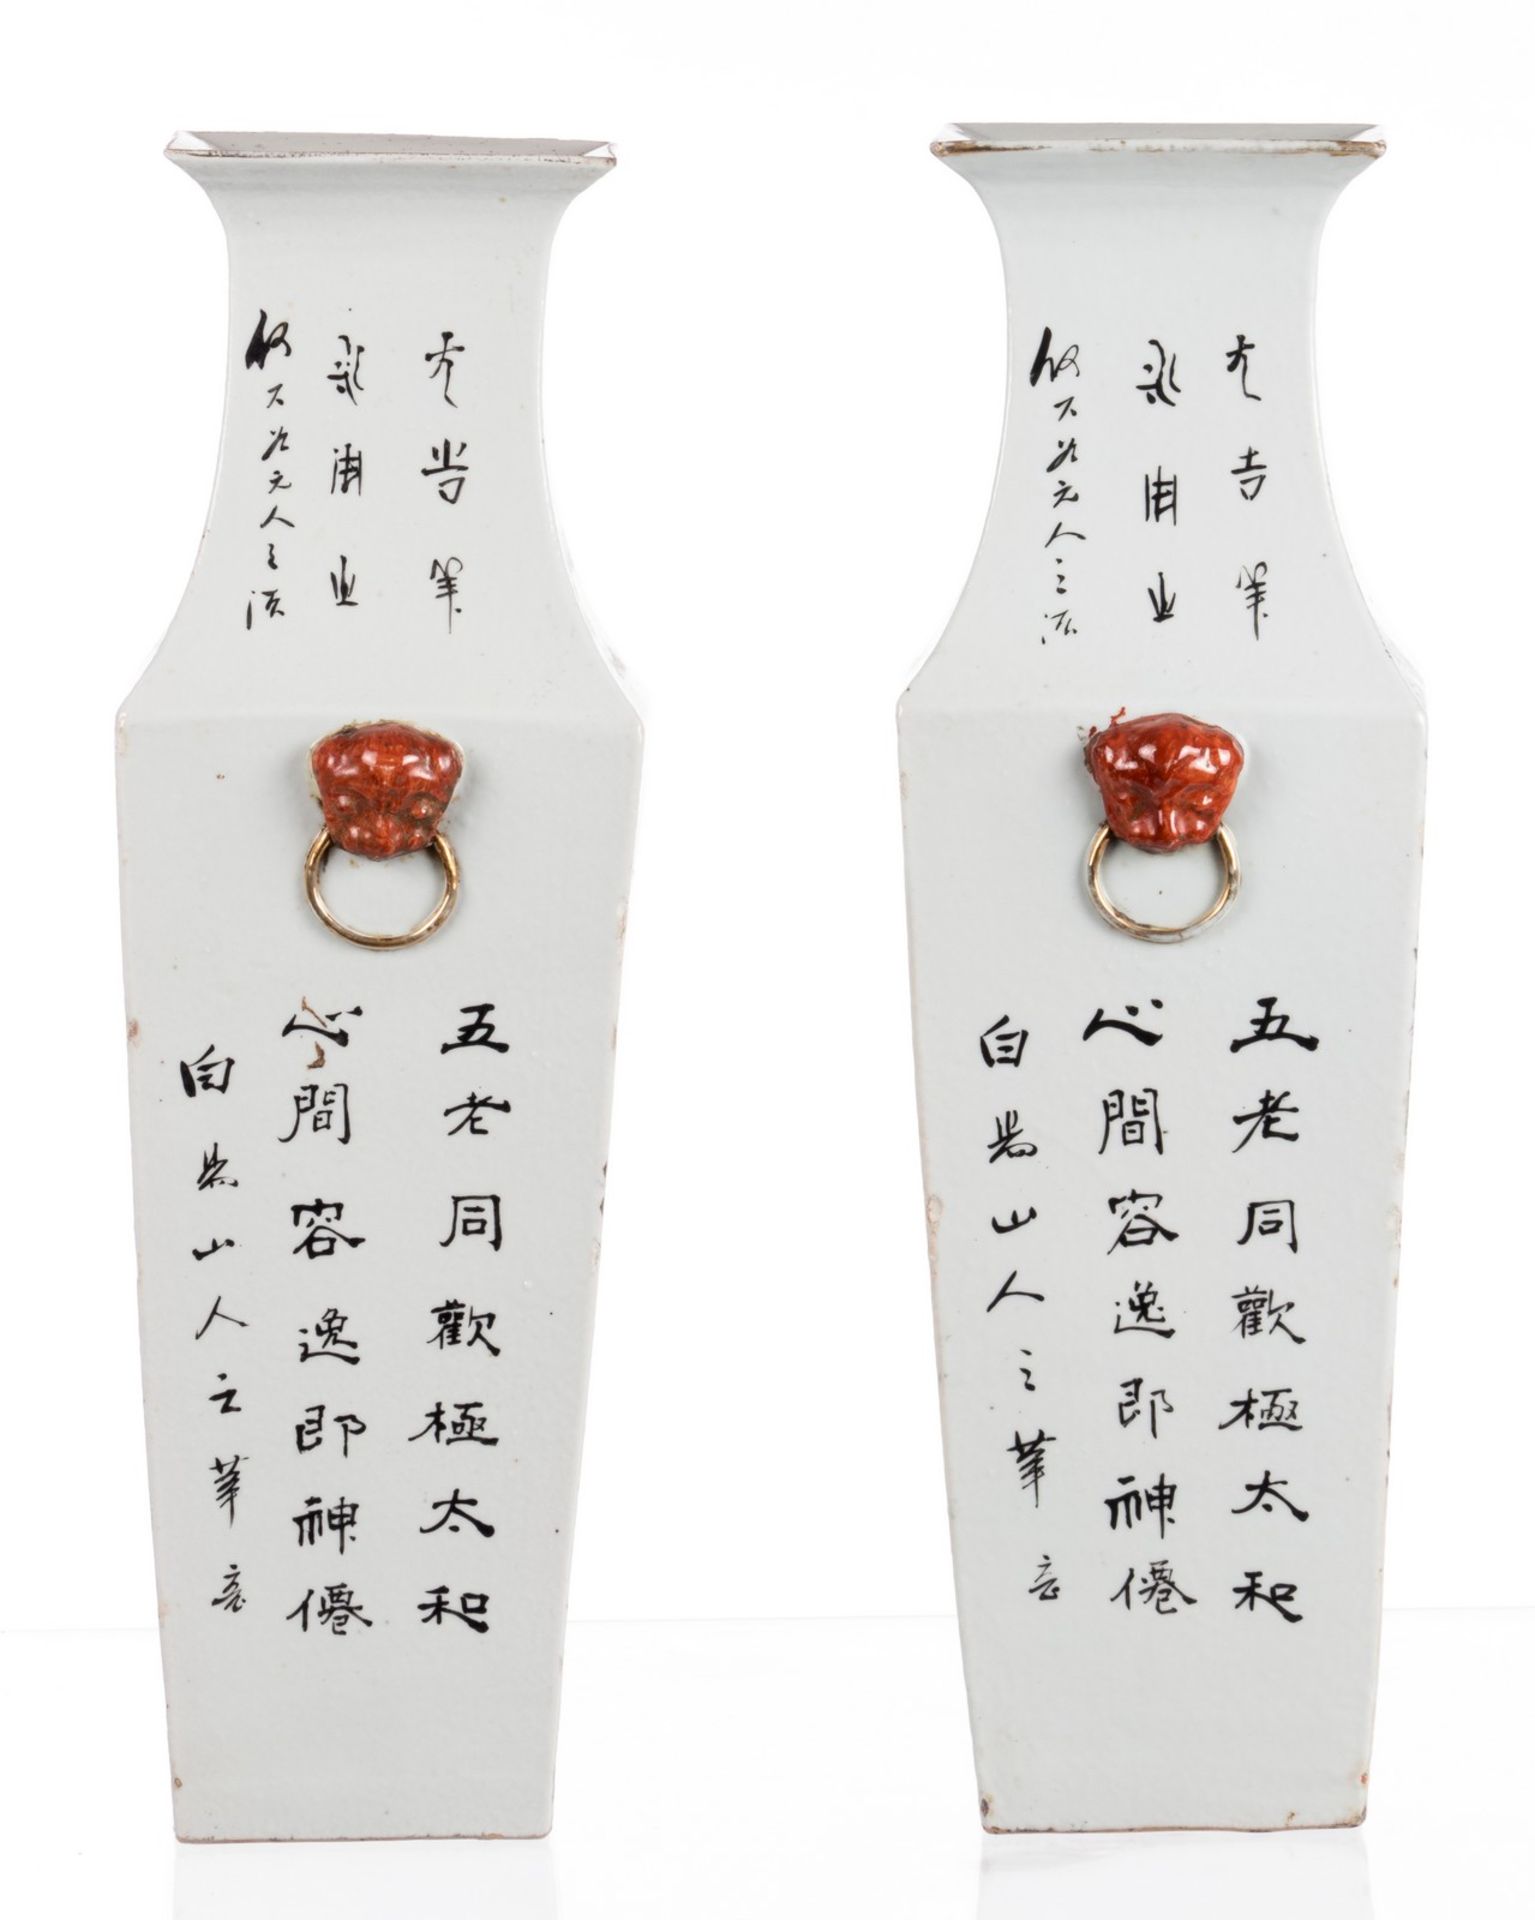 Two quadrangular vases, China, polychrome decorated with fishermen, literati and calligraphic texts, - Image 4 of 18